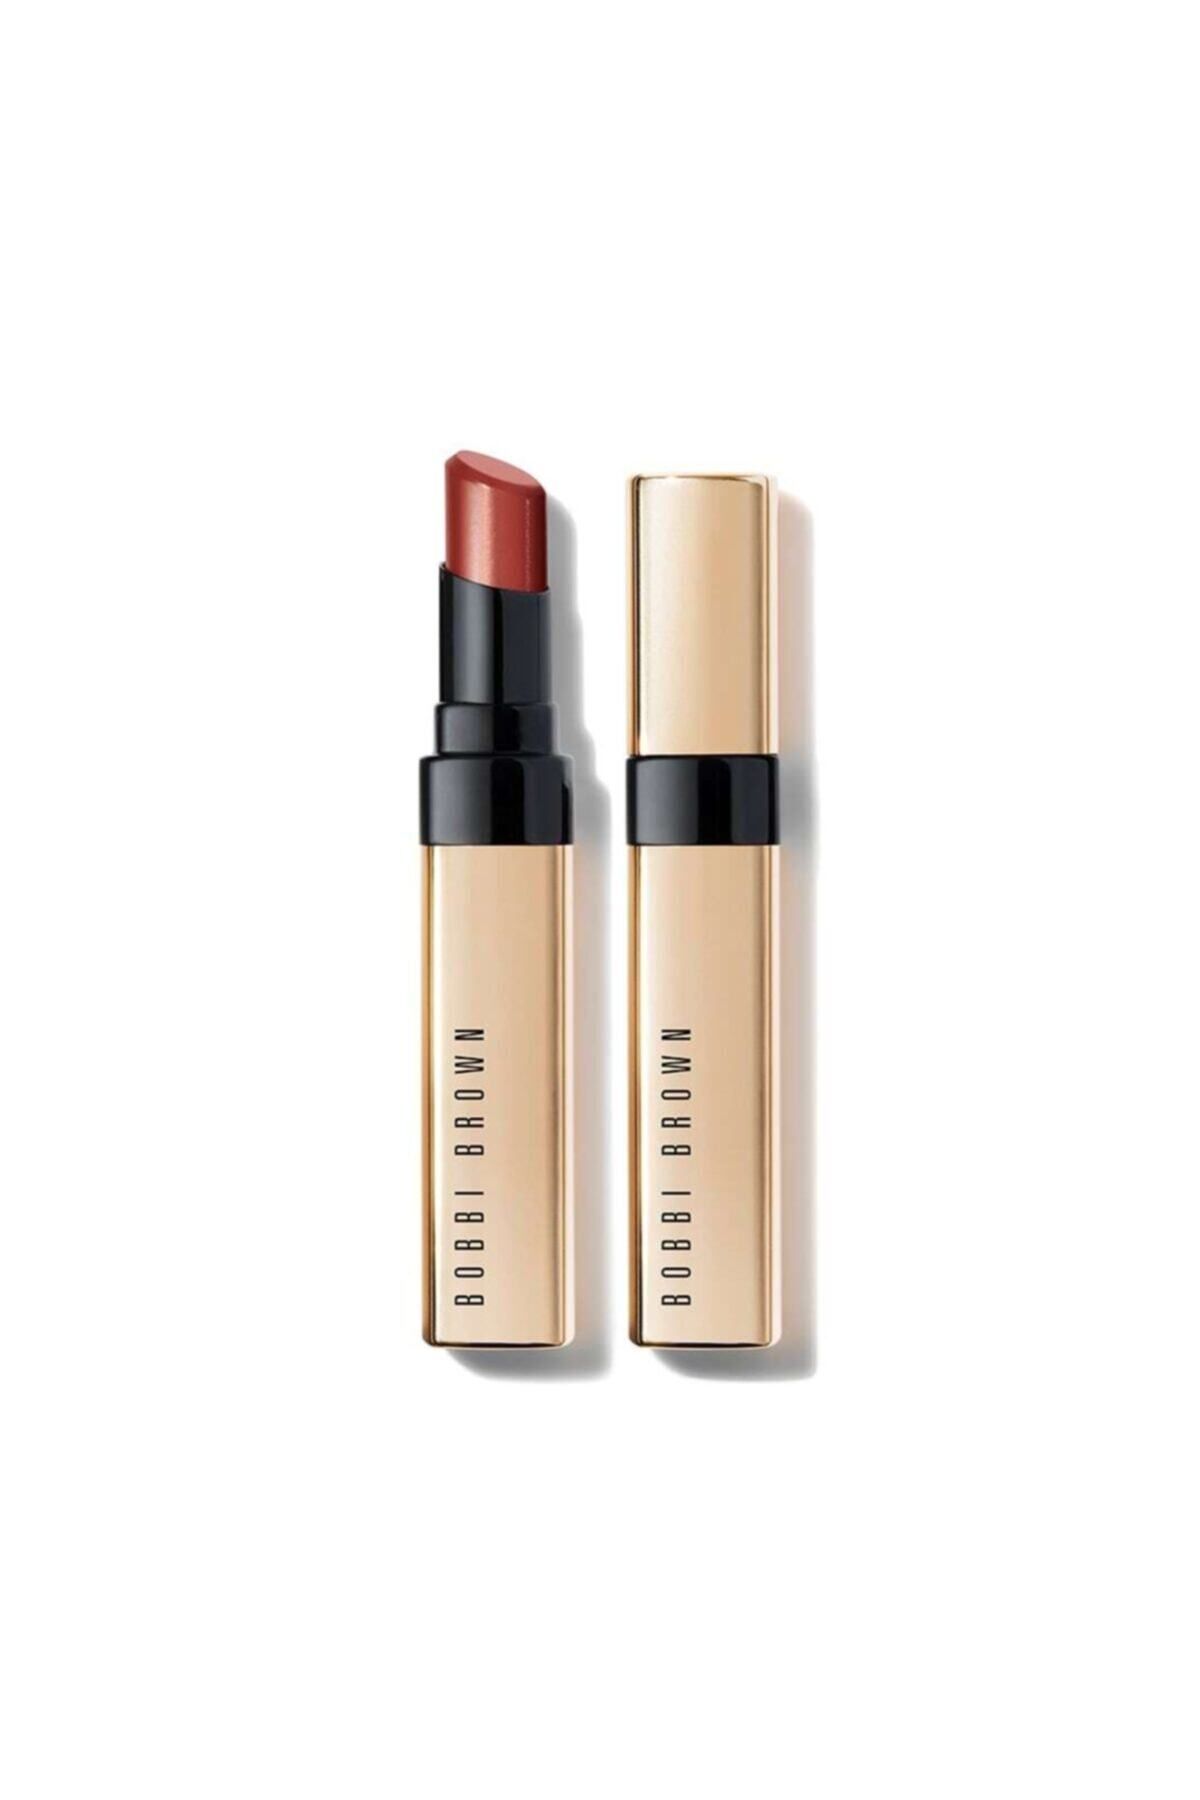 Bobbi Brown Luxe Shine Intense Lipstick / Ruj Fh19 Claret 2,3 g